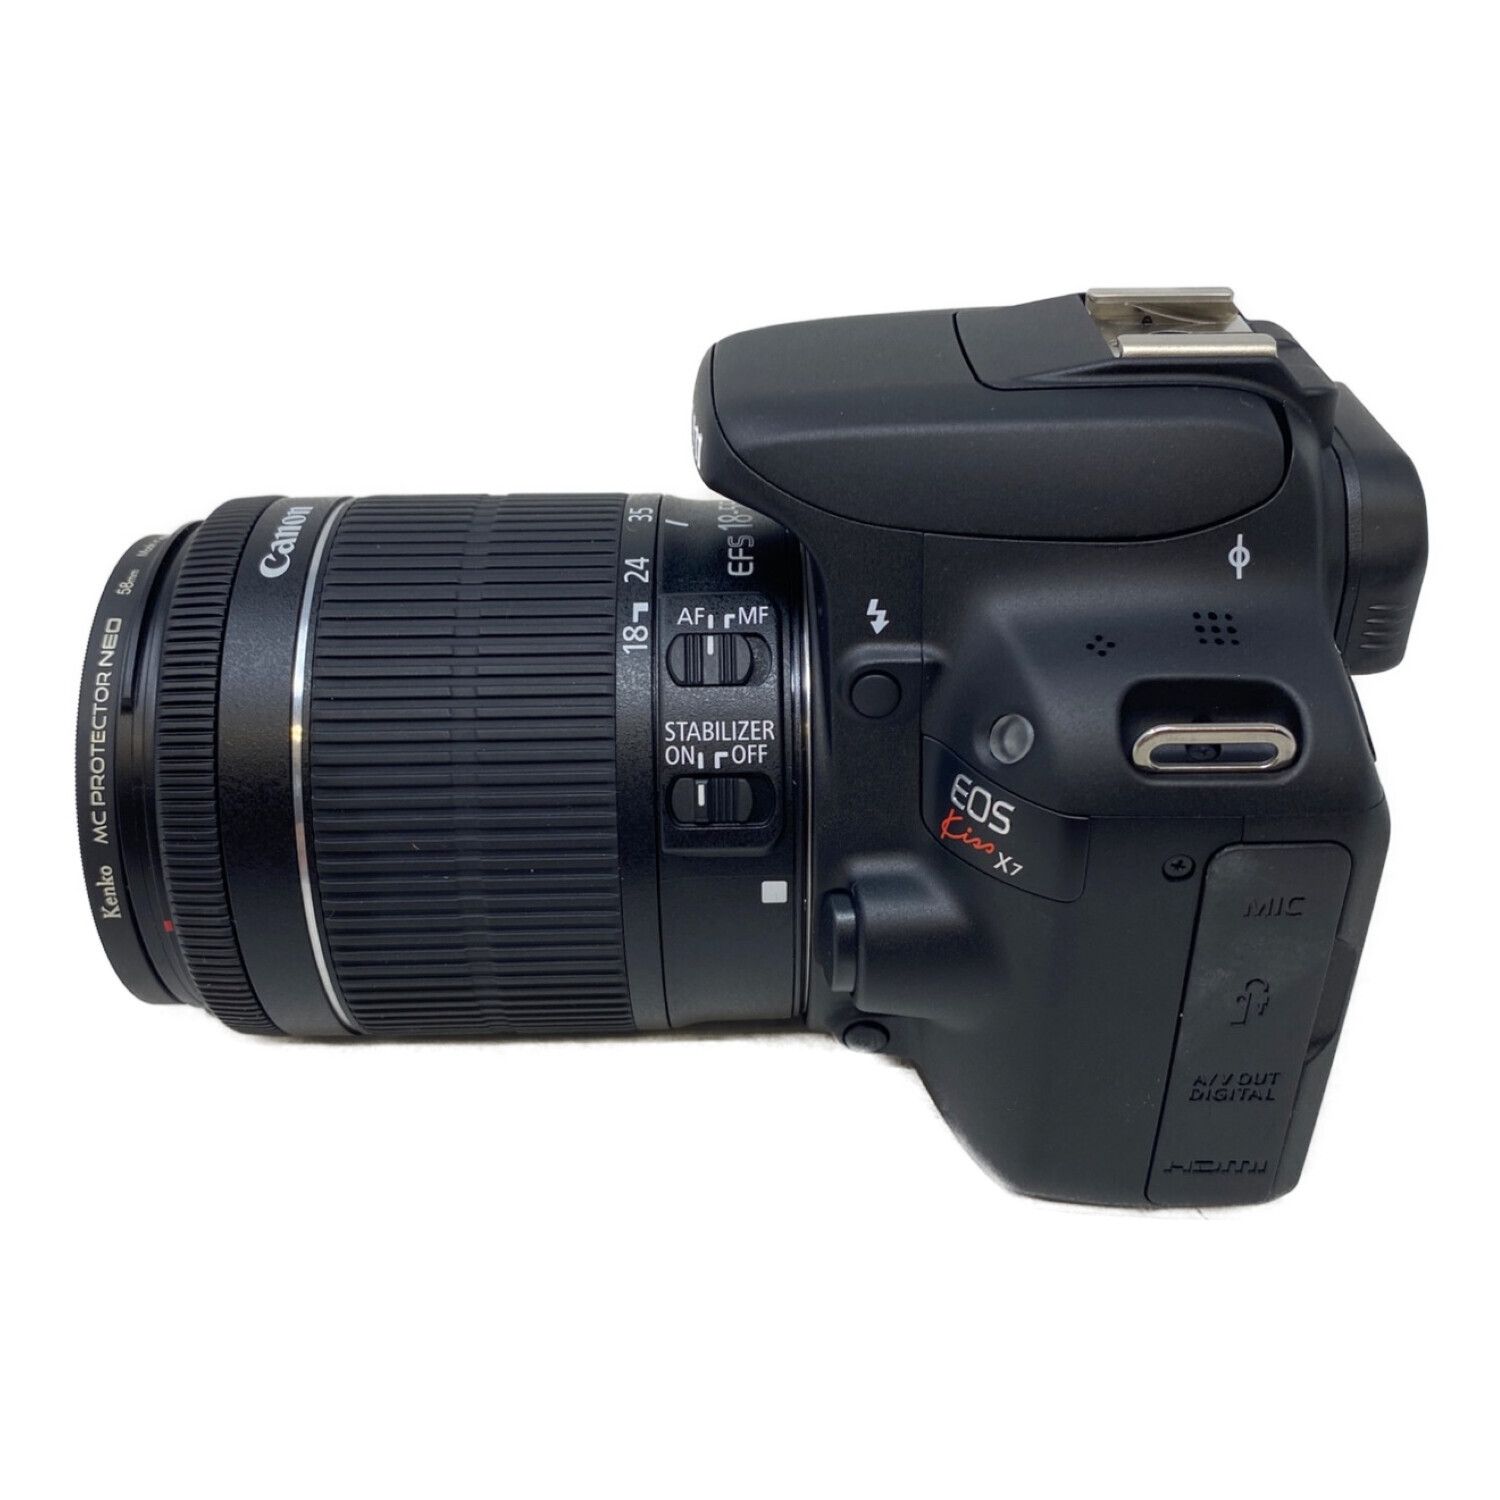 CANON (キャノン) デジタル一眼レフカメラ EOS Kiss X7 DS126441 